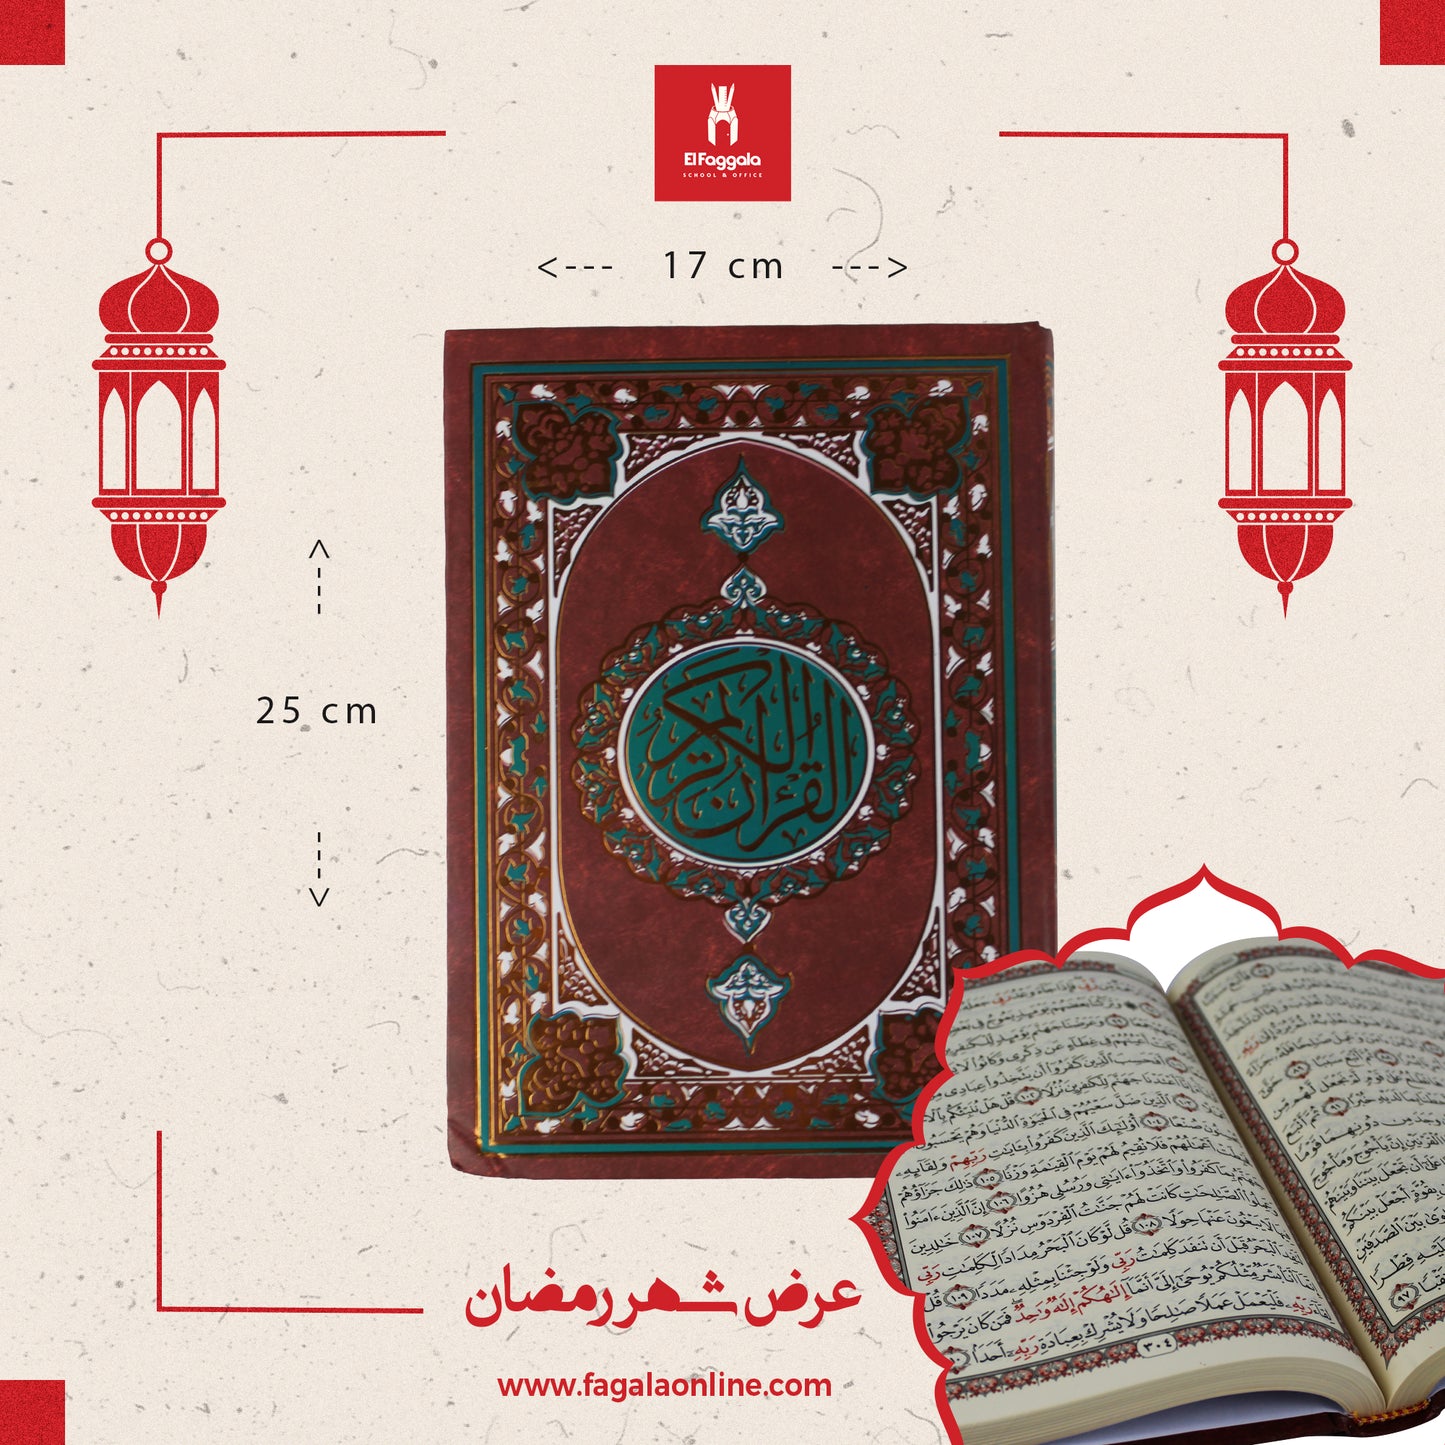 Holy Quran 17cm x 25 cm